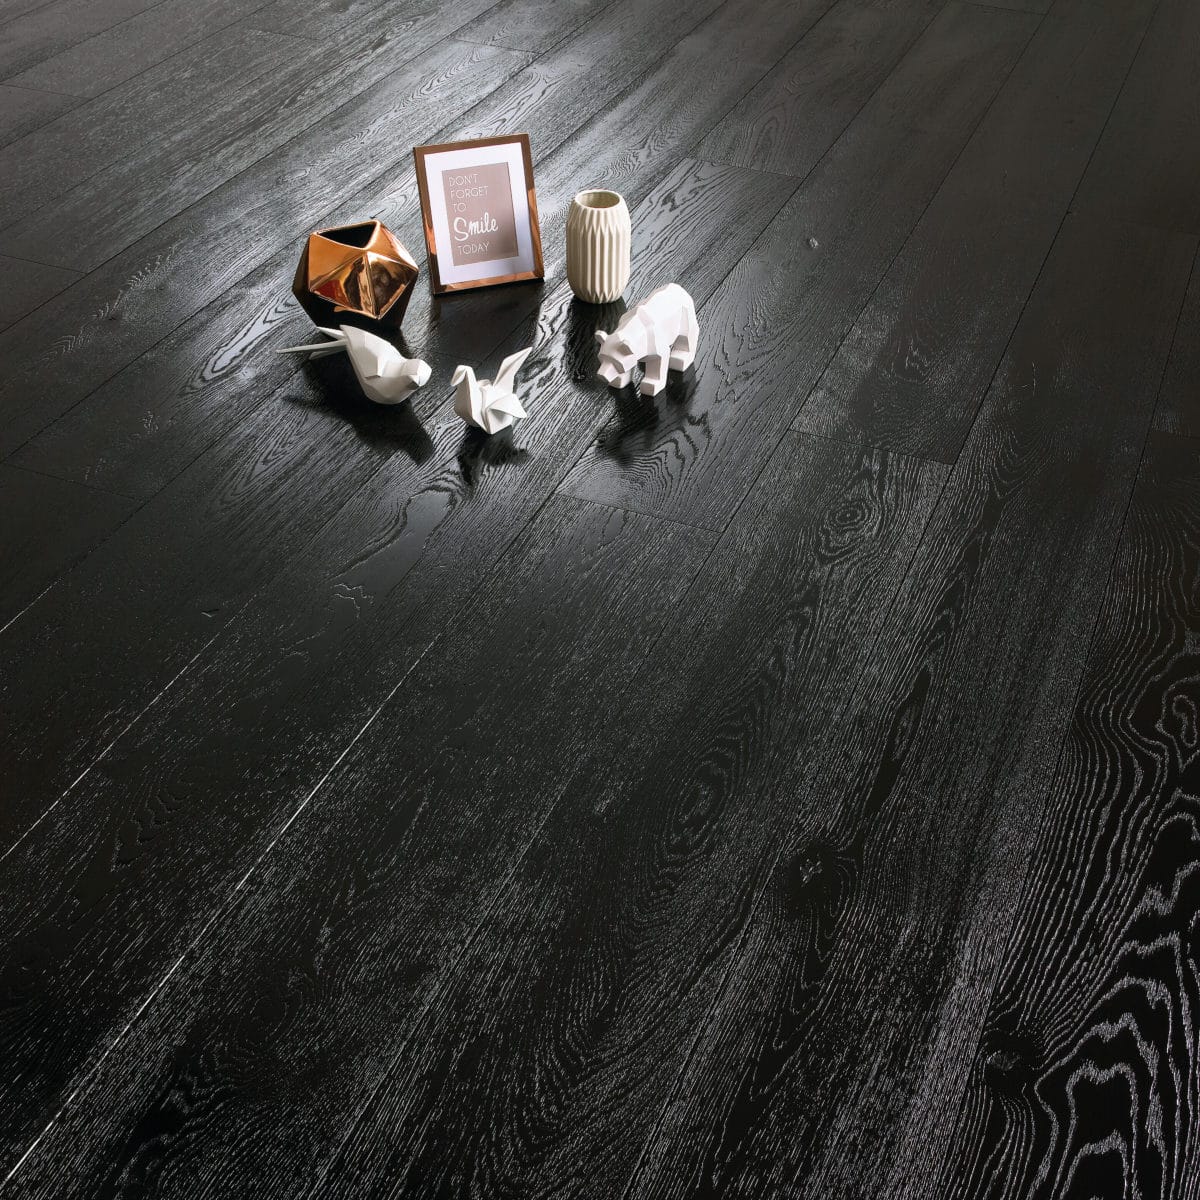 CARBONE pure black contrast gloss varnish matt